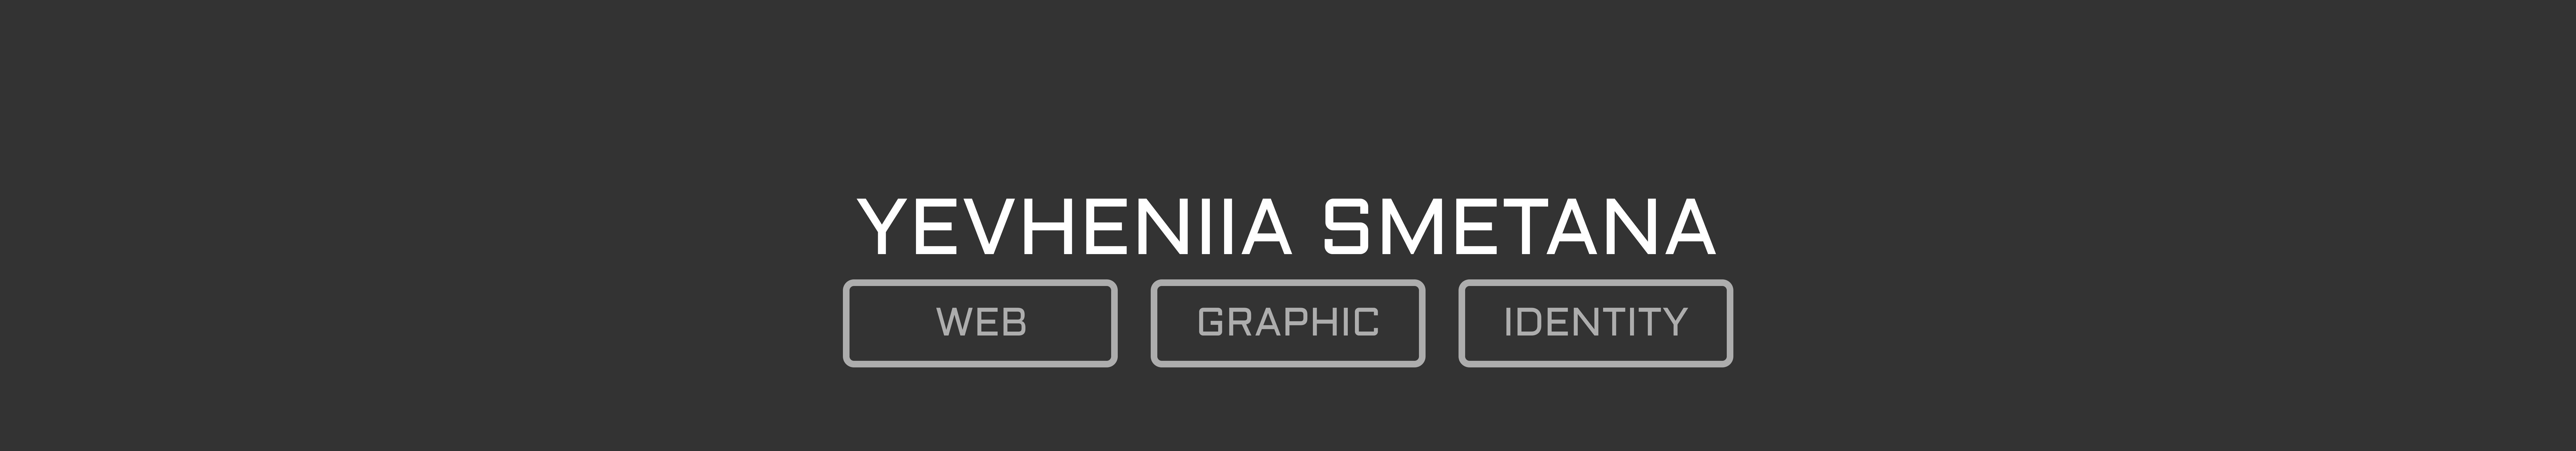 Yevheniia Smetana's profile banner